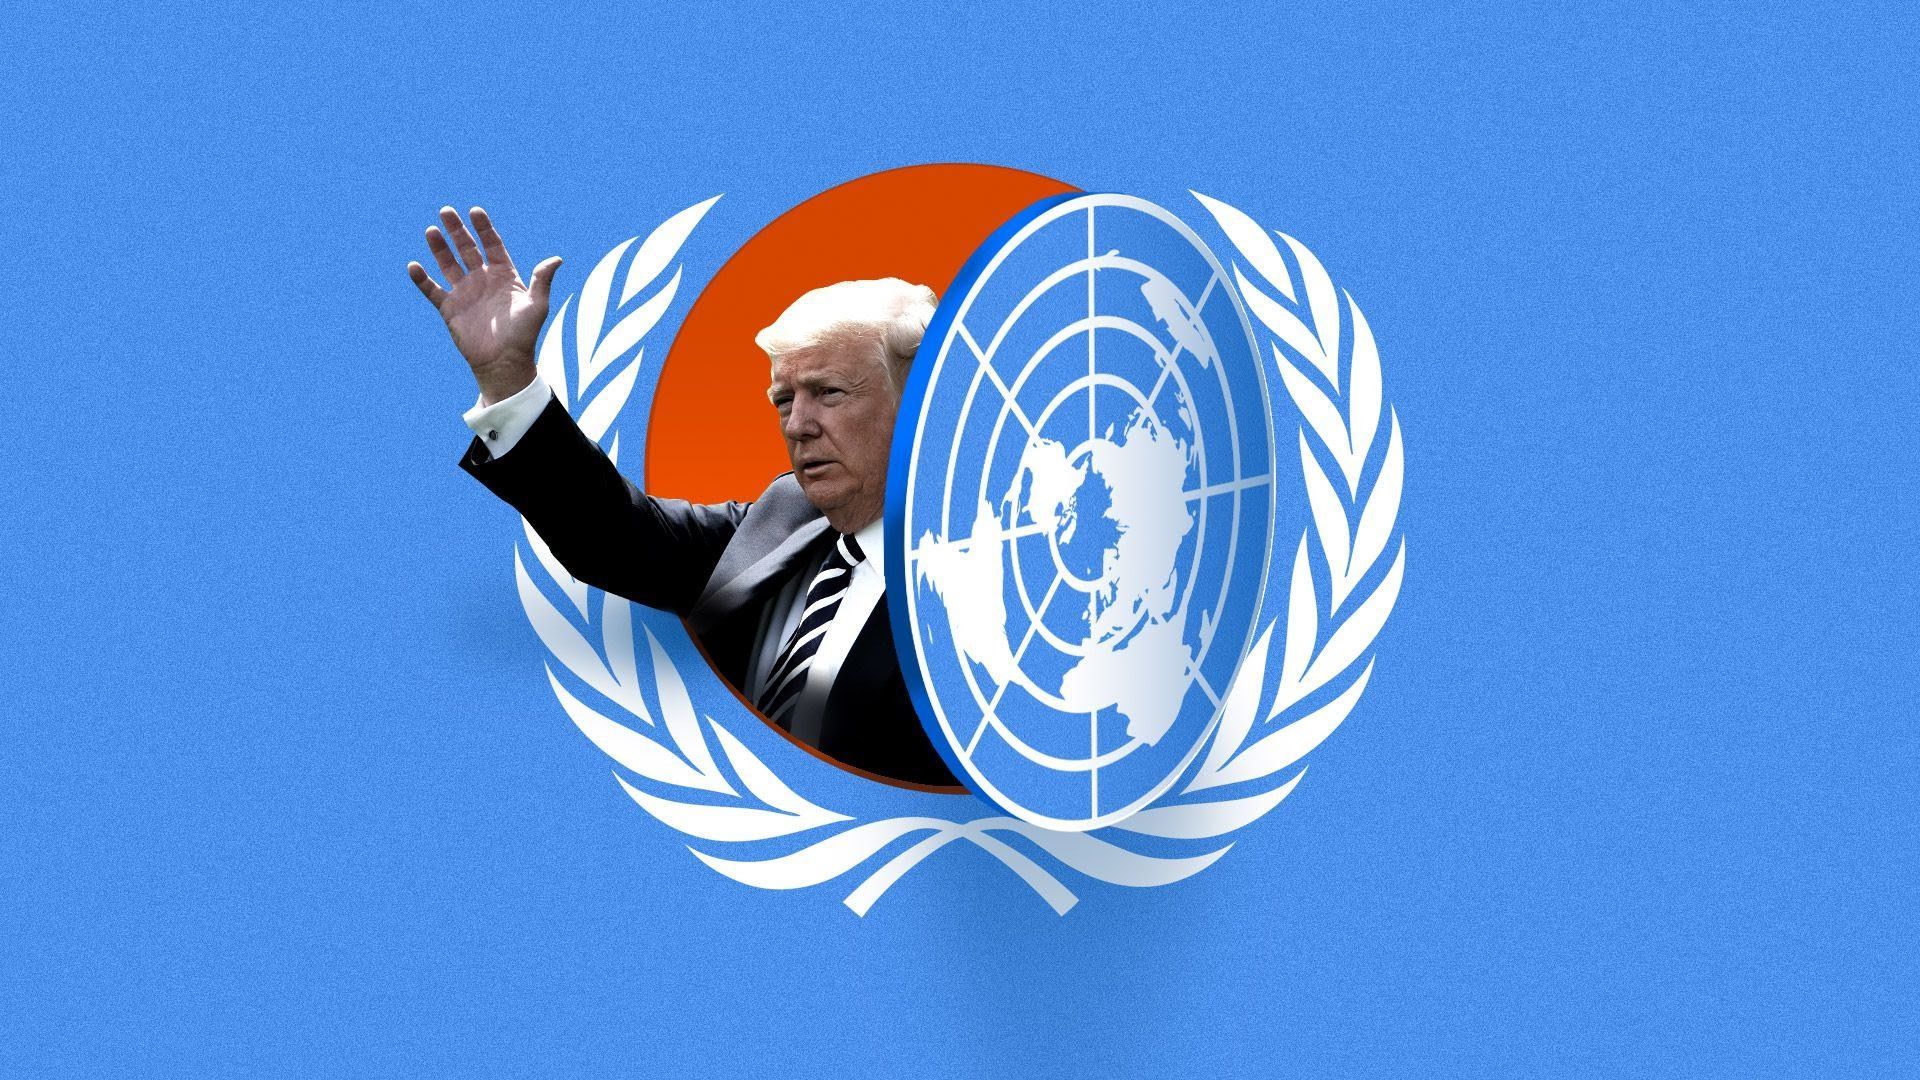 Trump waving through United Nations General Assembly logo